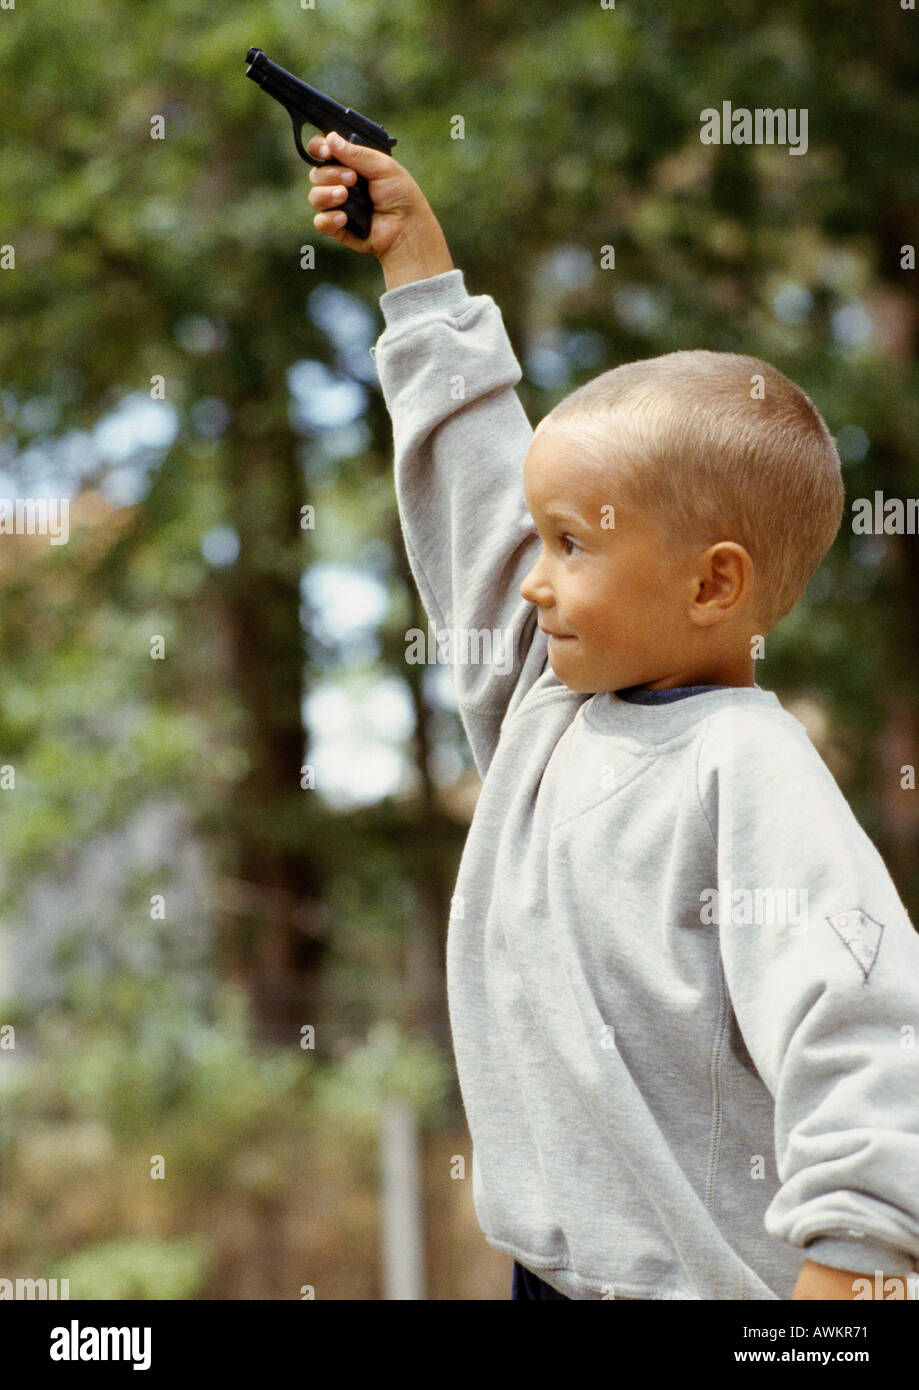 Boy holding toy gun, outside, rear view Stock Photo